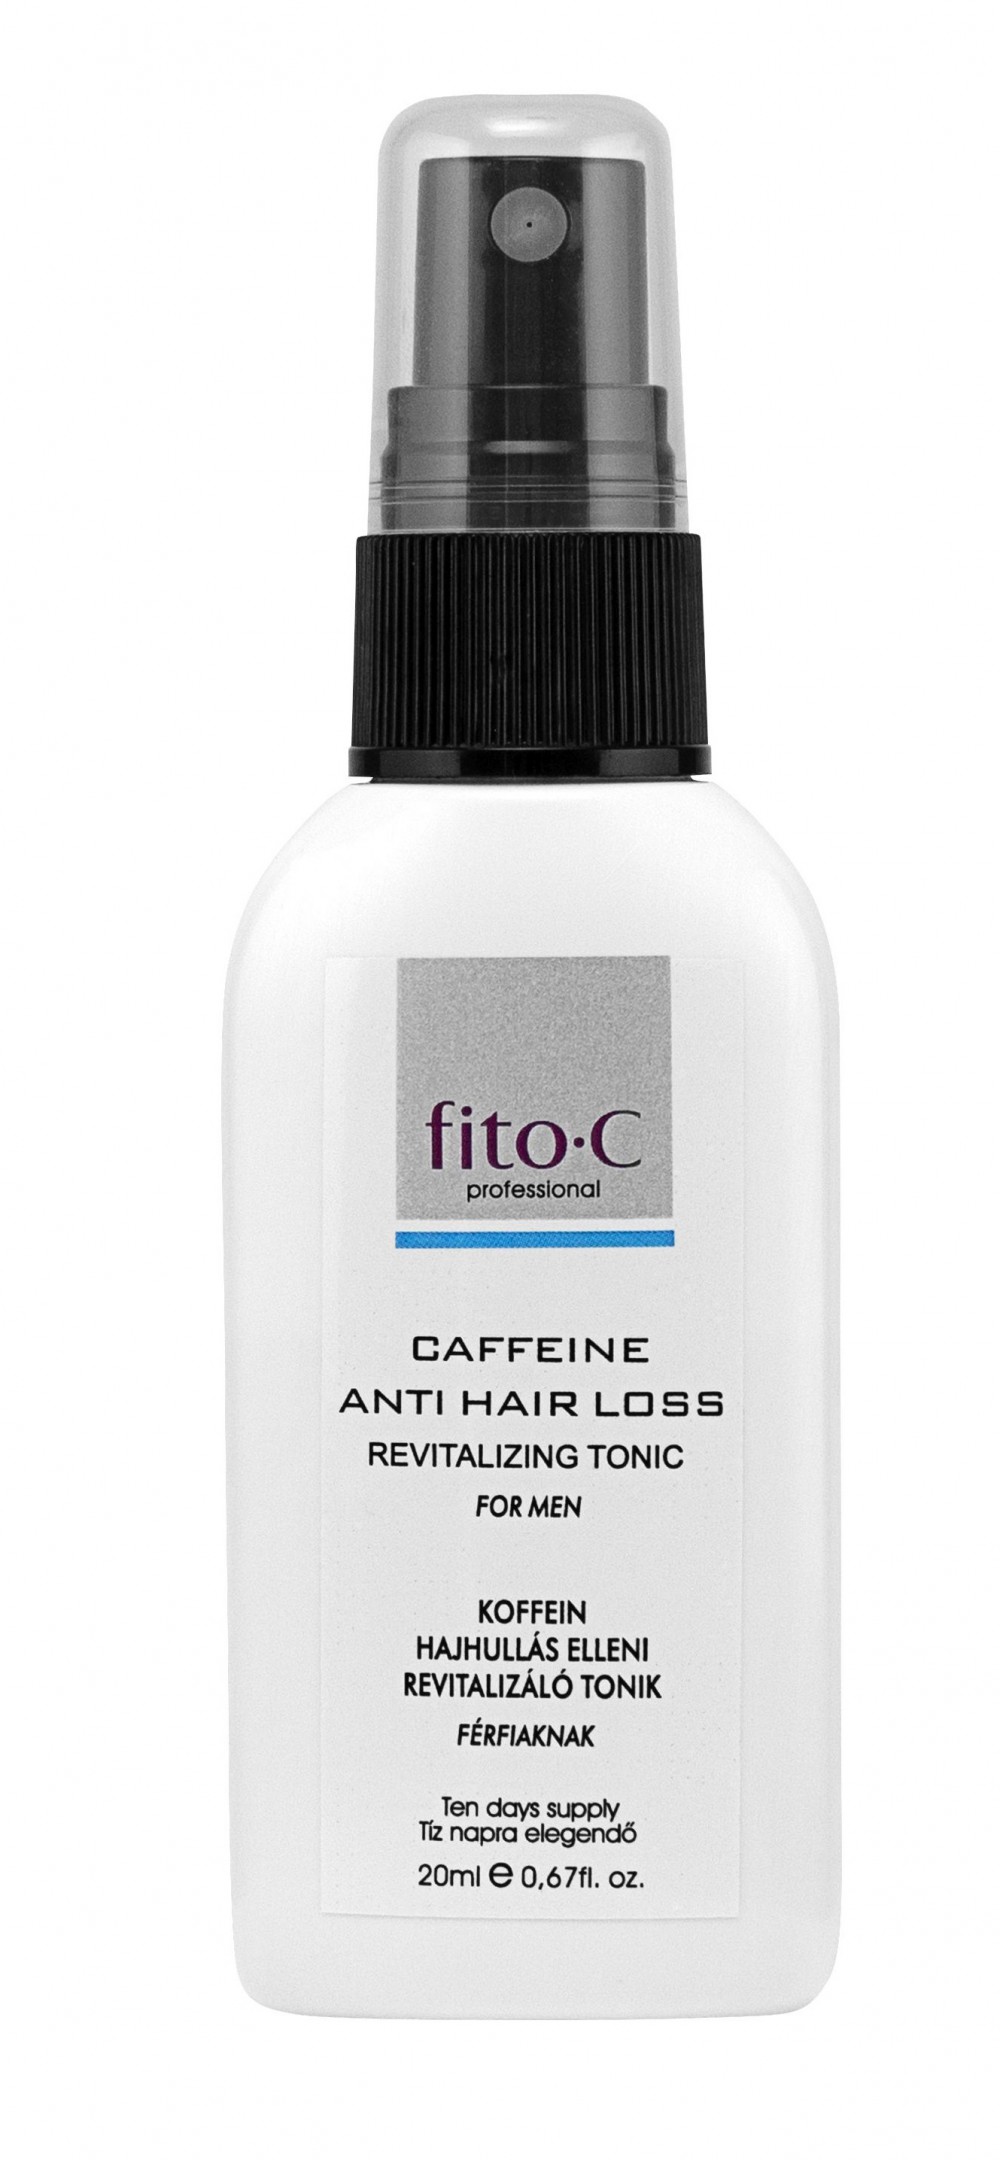 fito.C - Caffeine Anti Hair Loss Revitalizing Tonic for Men - Koffein Hajhullás Elleni Revitalizáló Tonik Férfiaknak, 20ml - TESZTER